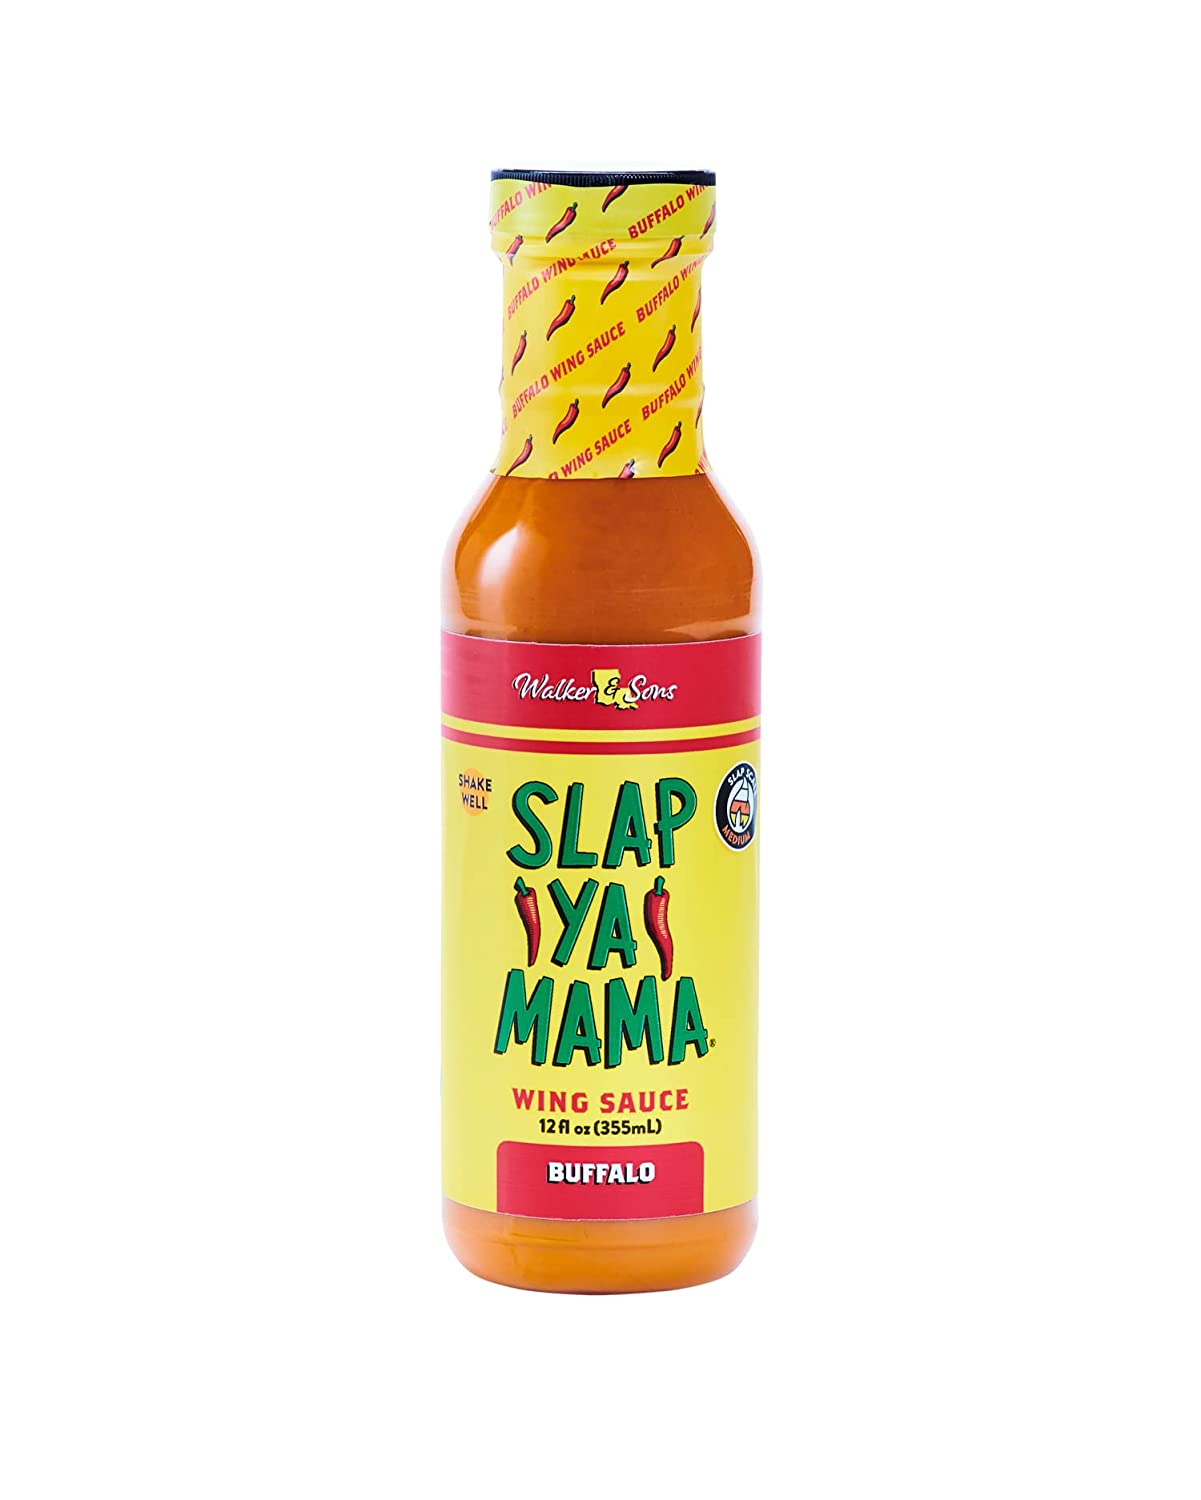 Slap Ya Mama Cajun Buffalo Wing Sauce 12oz (355ml)